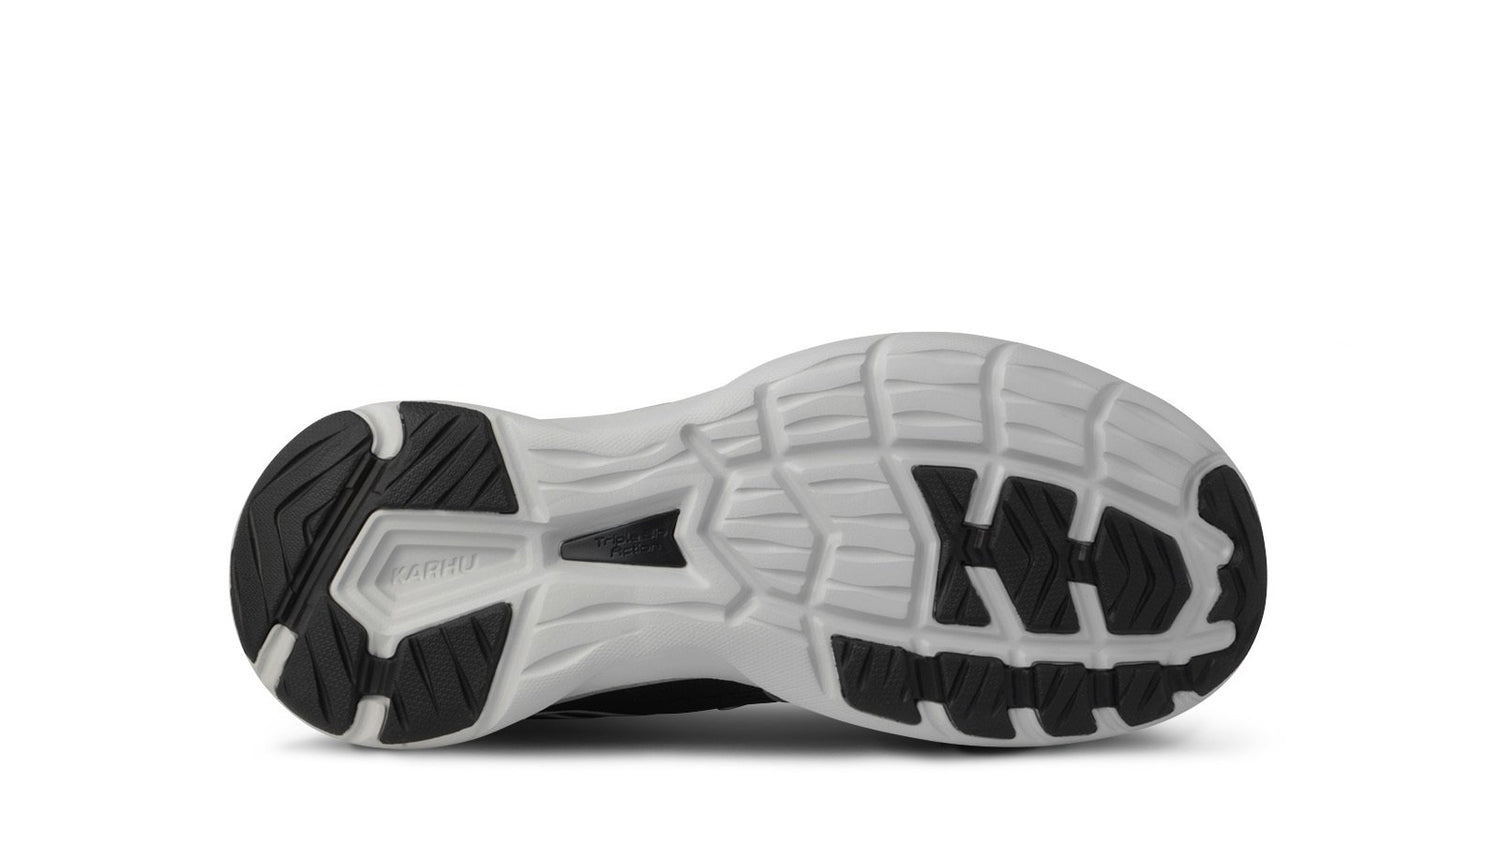 Women's Karhu Fusion 3.5 running shoe, for the neutral runner. – Karhu US